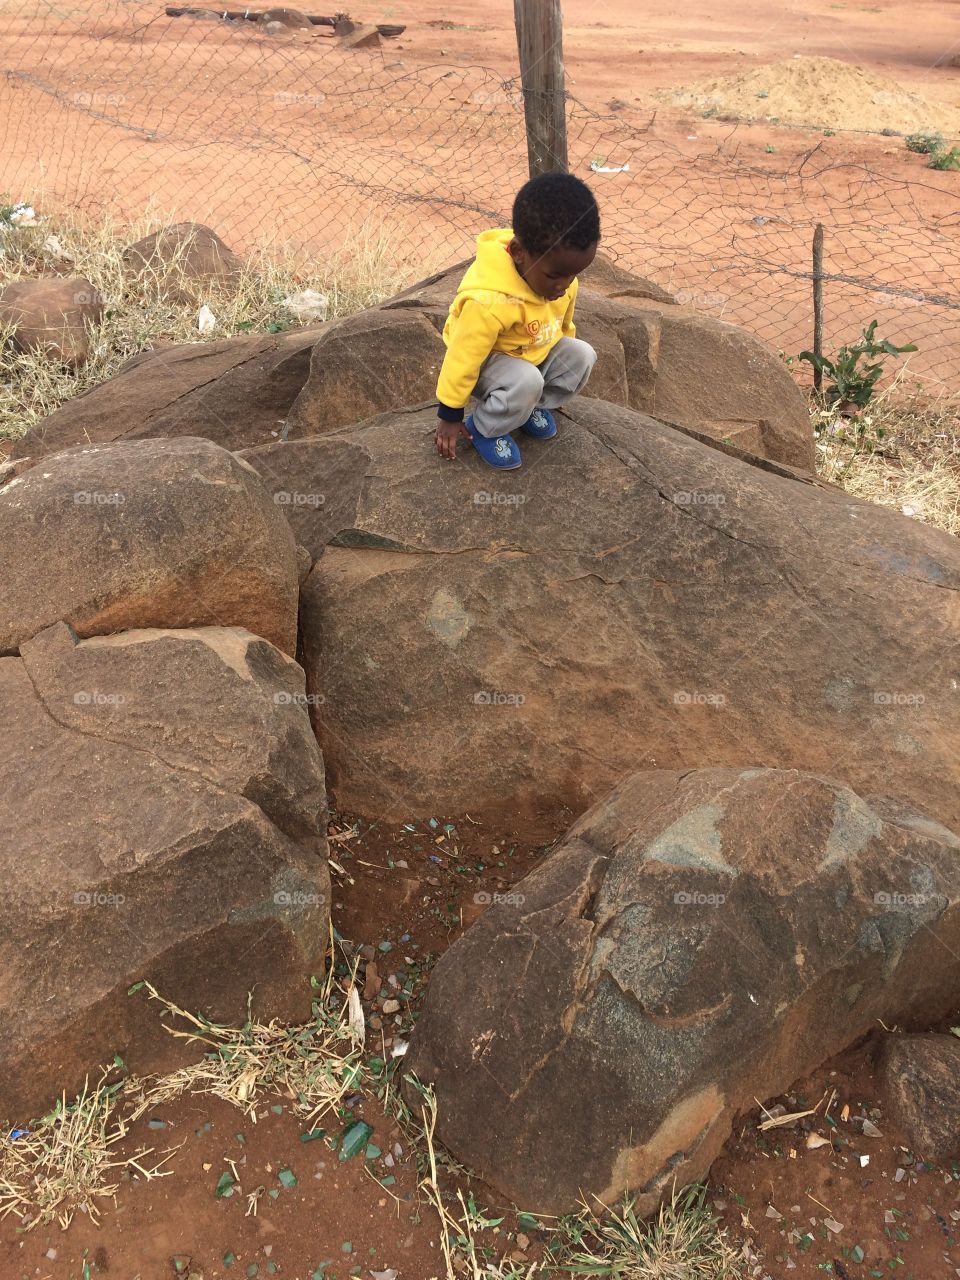 Climbing rocks